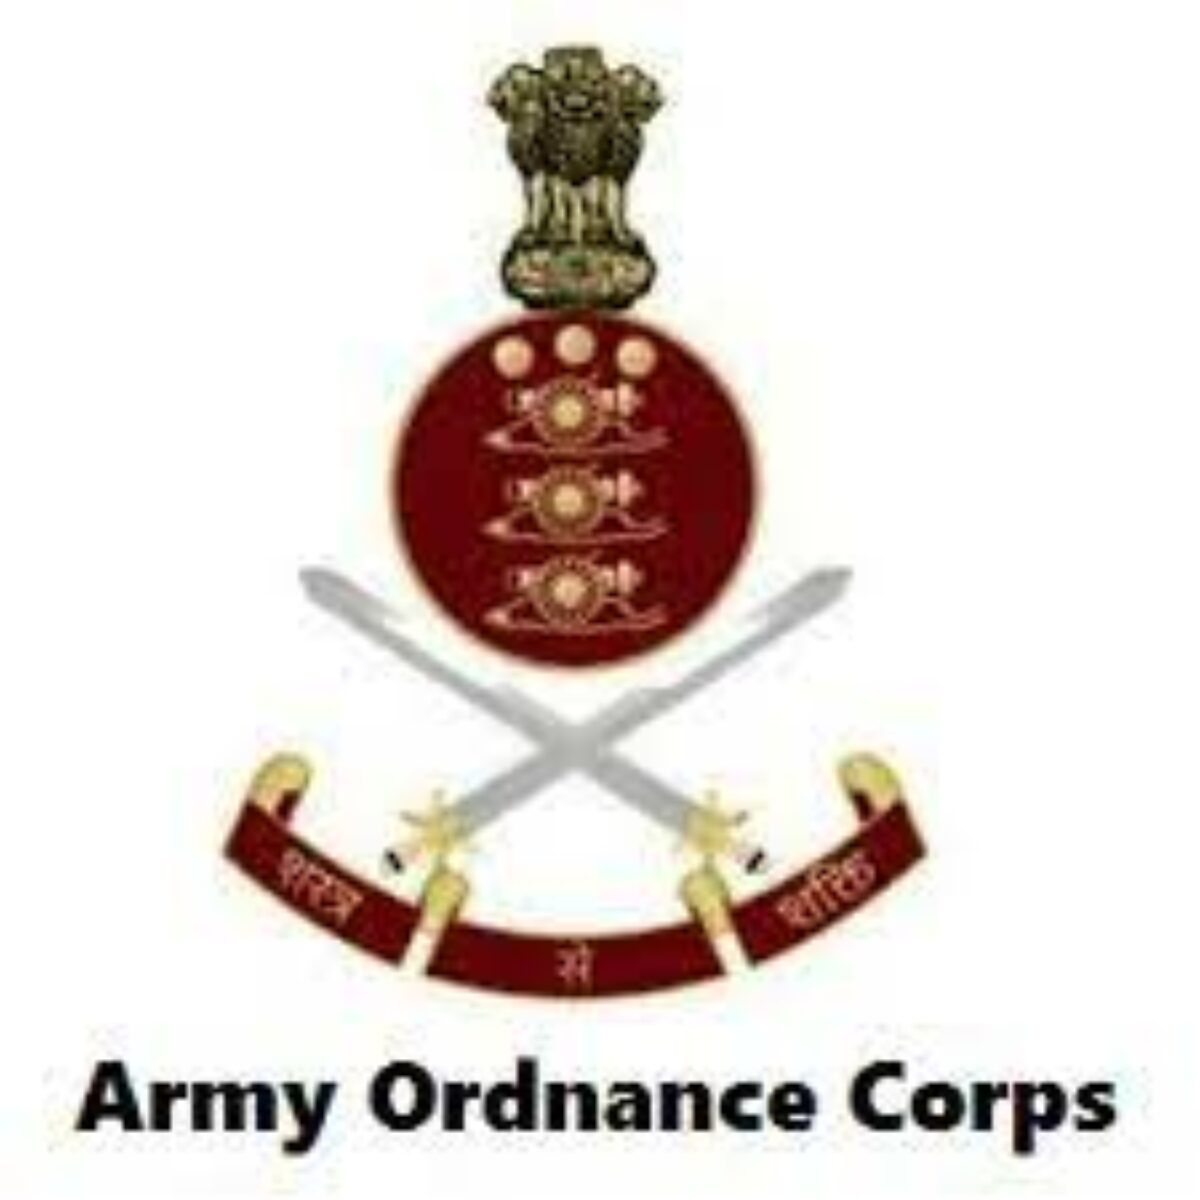 British Indian Army Ordnance Corps collar badges, King's Crown blackened  brass | eBay